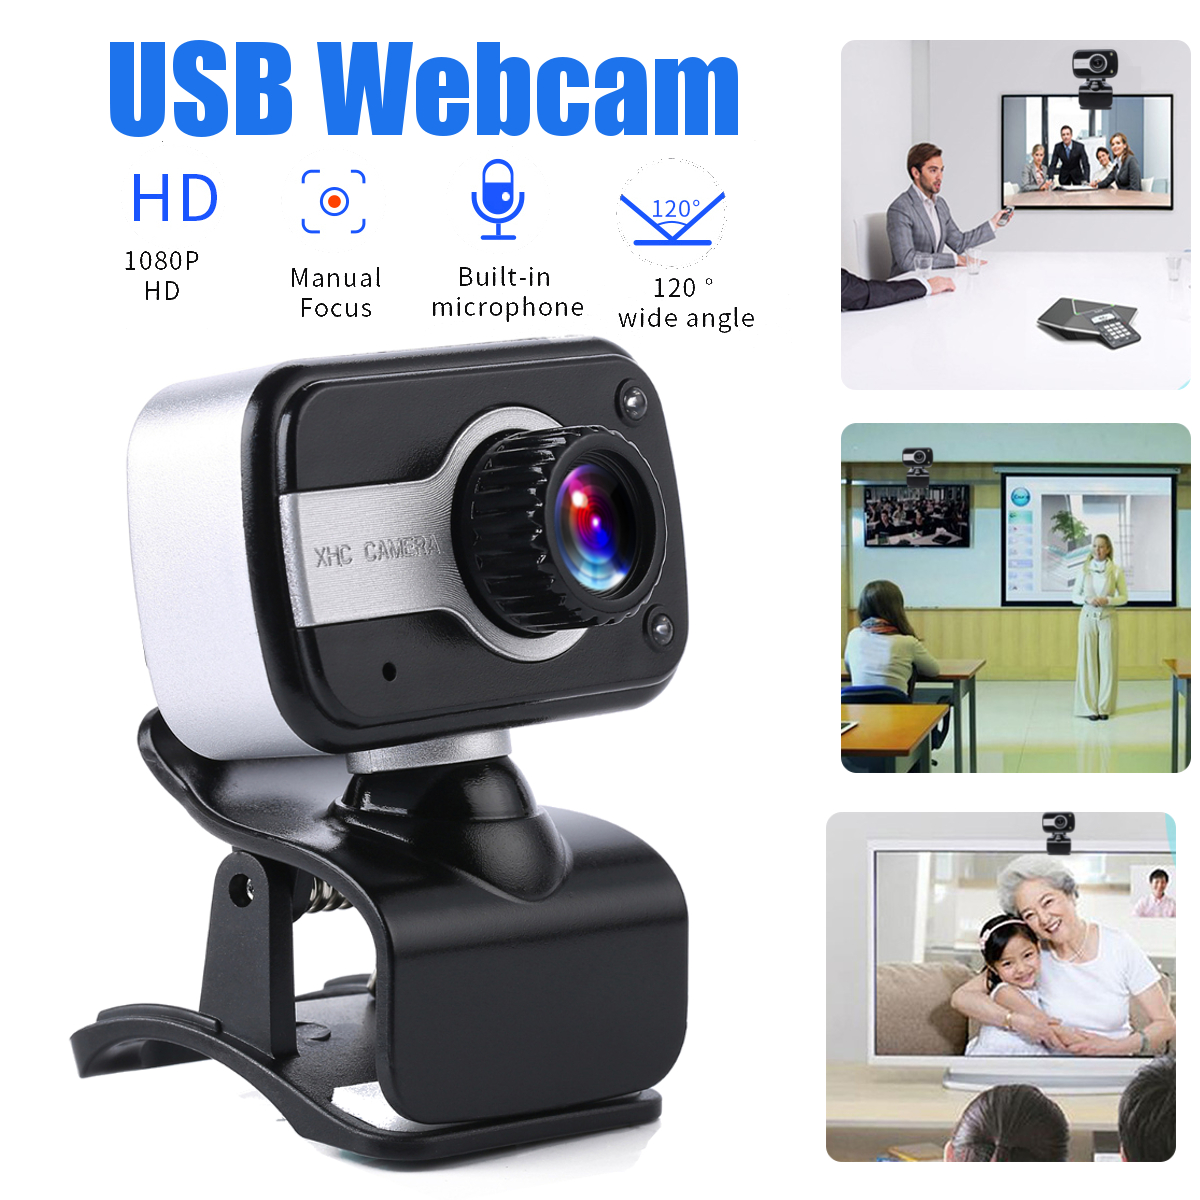 USB-20-HD-1080P-Webcam-Web-Camera-Computer-HD-Built-in-Microphone-USB-Plug-and-Play-1670747-1